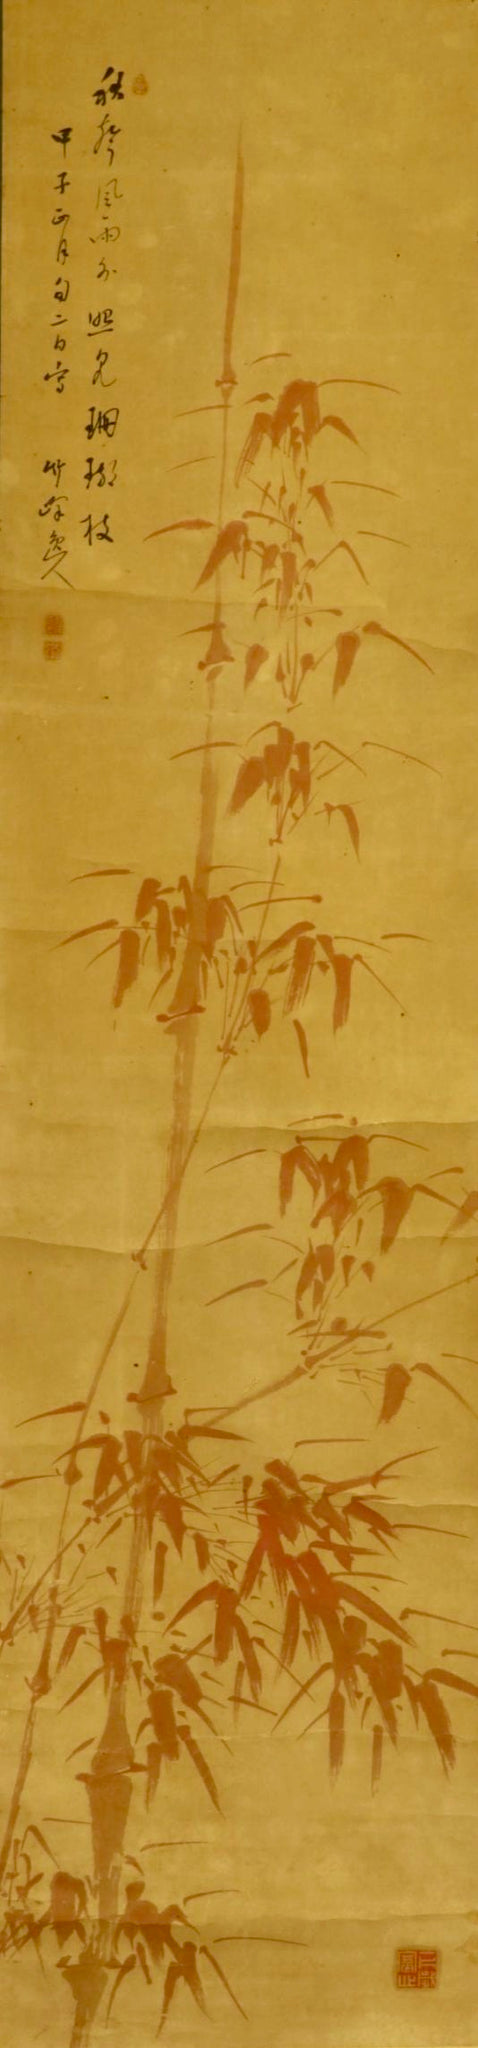 Hanging Scroll "Red Bamboo" - Japan - XIX c